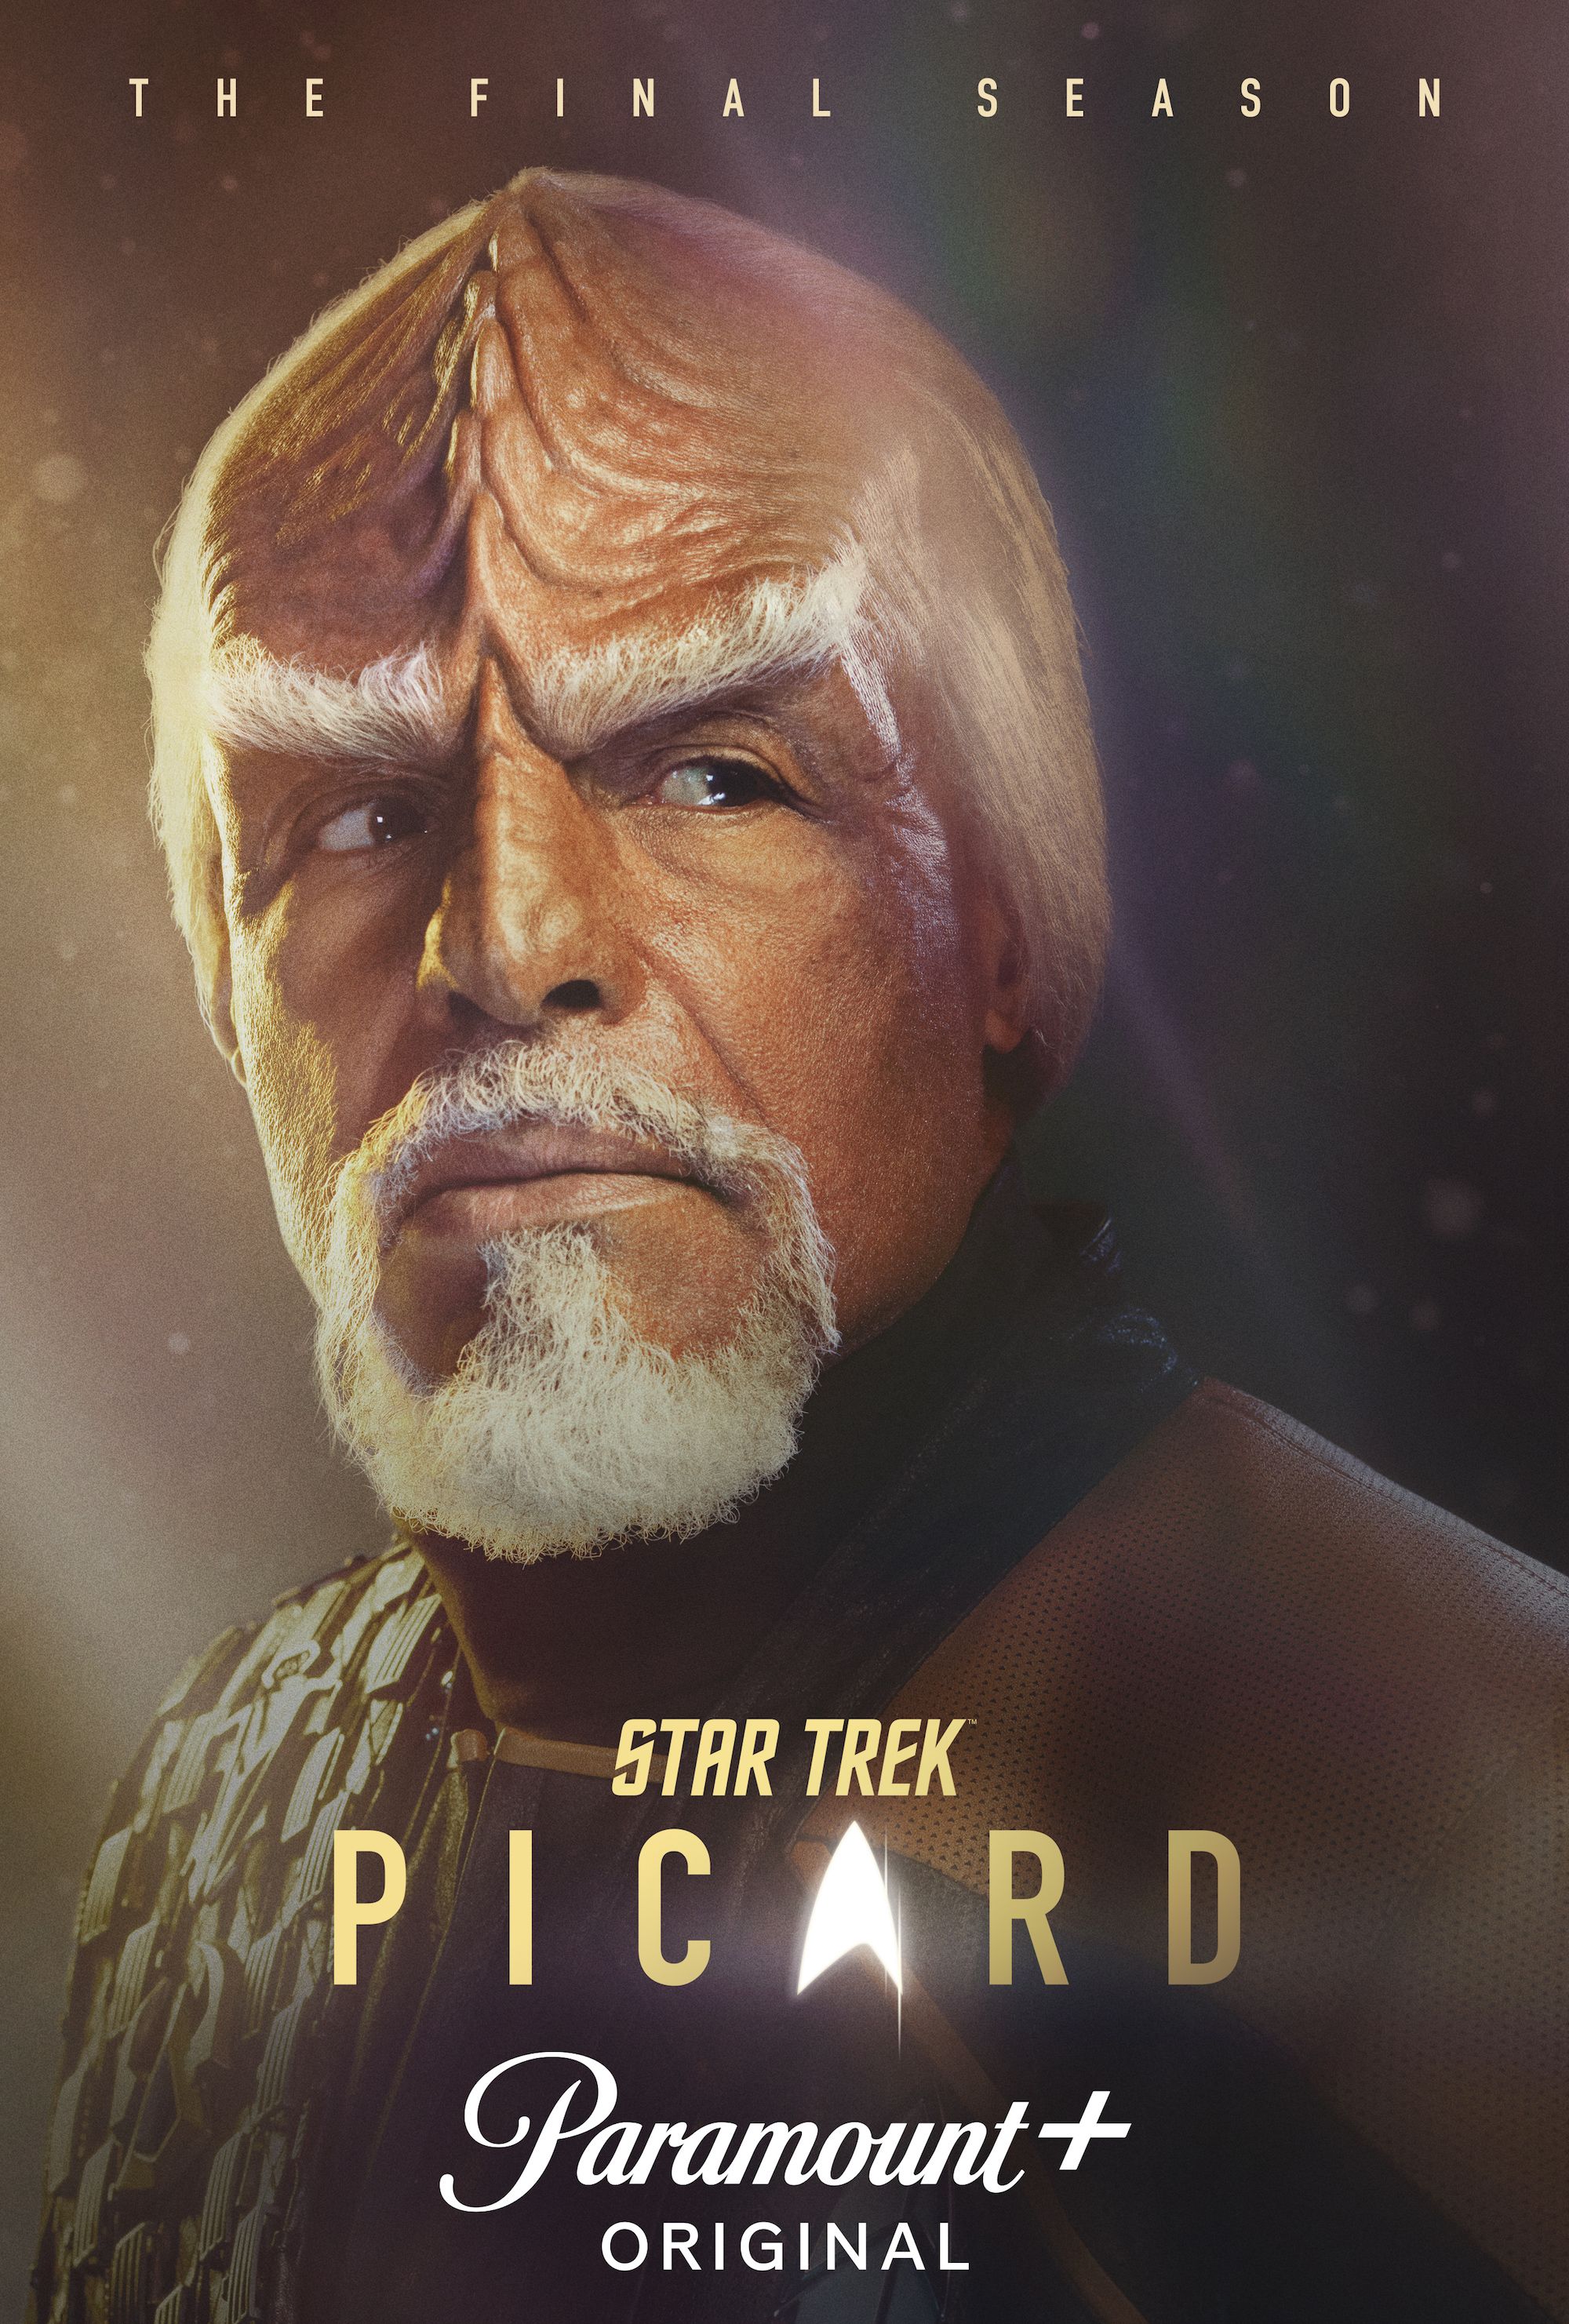 captain worf star trek picard